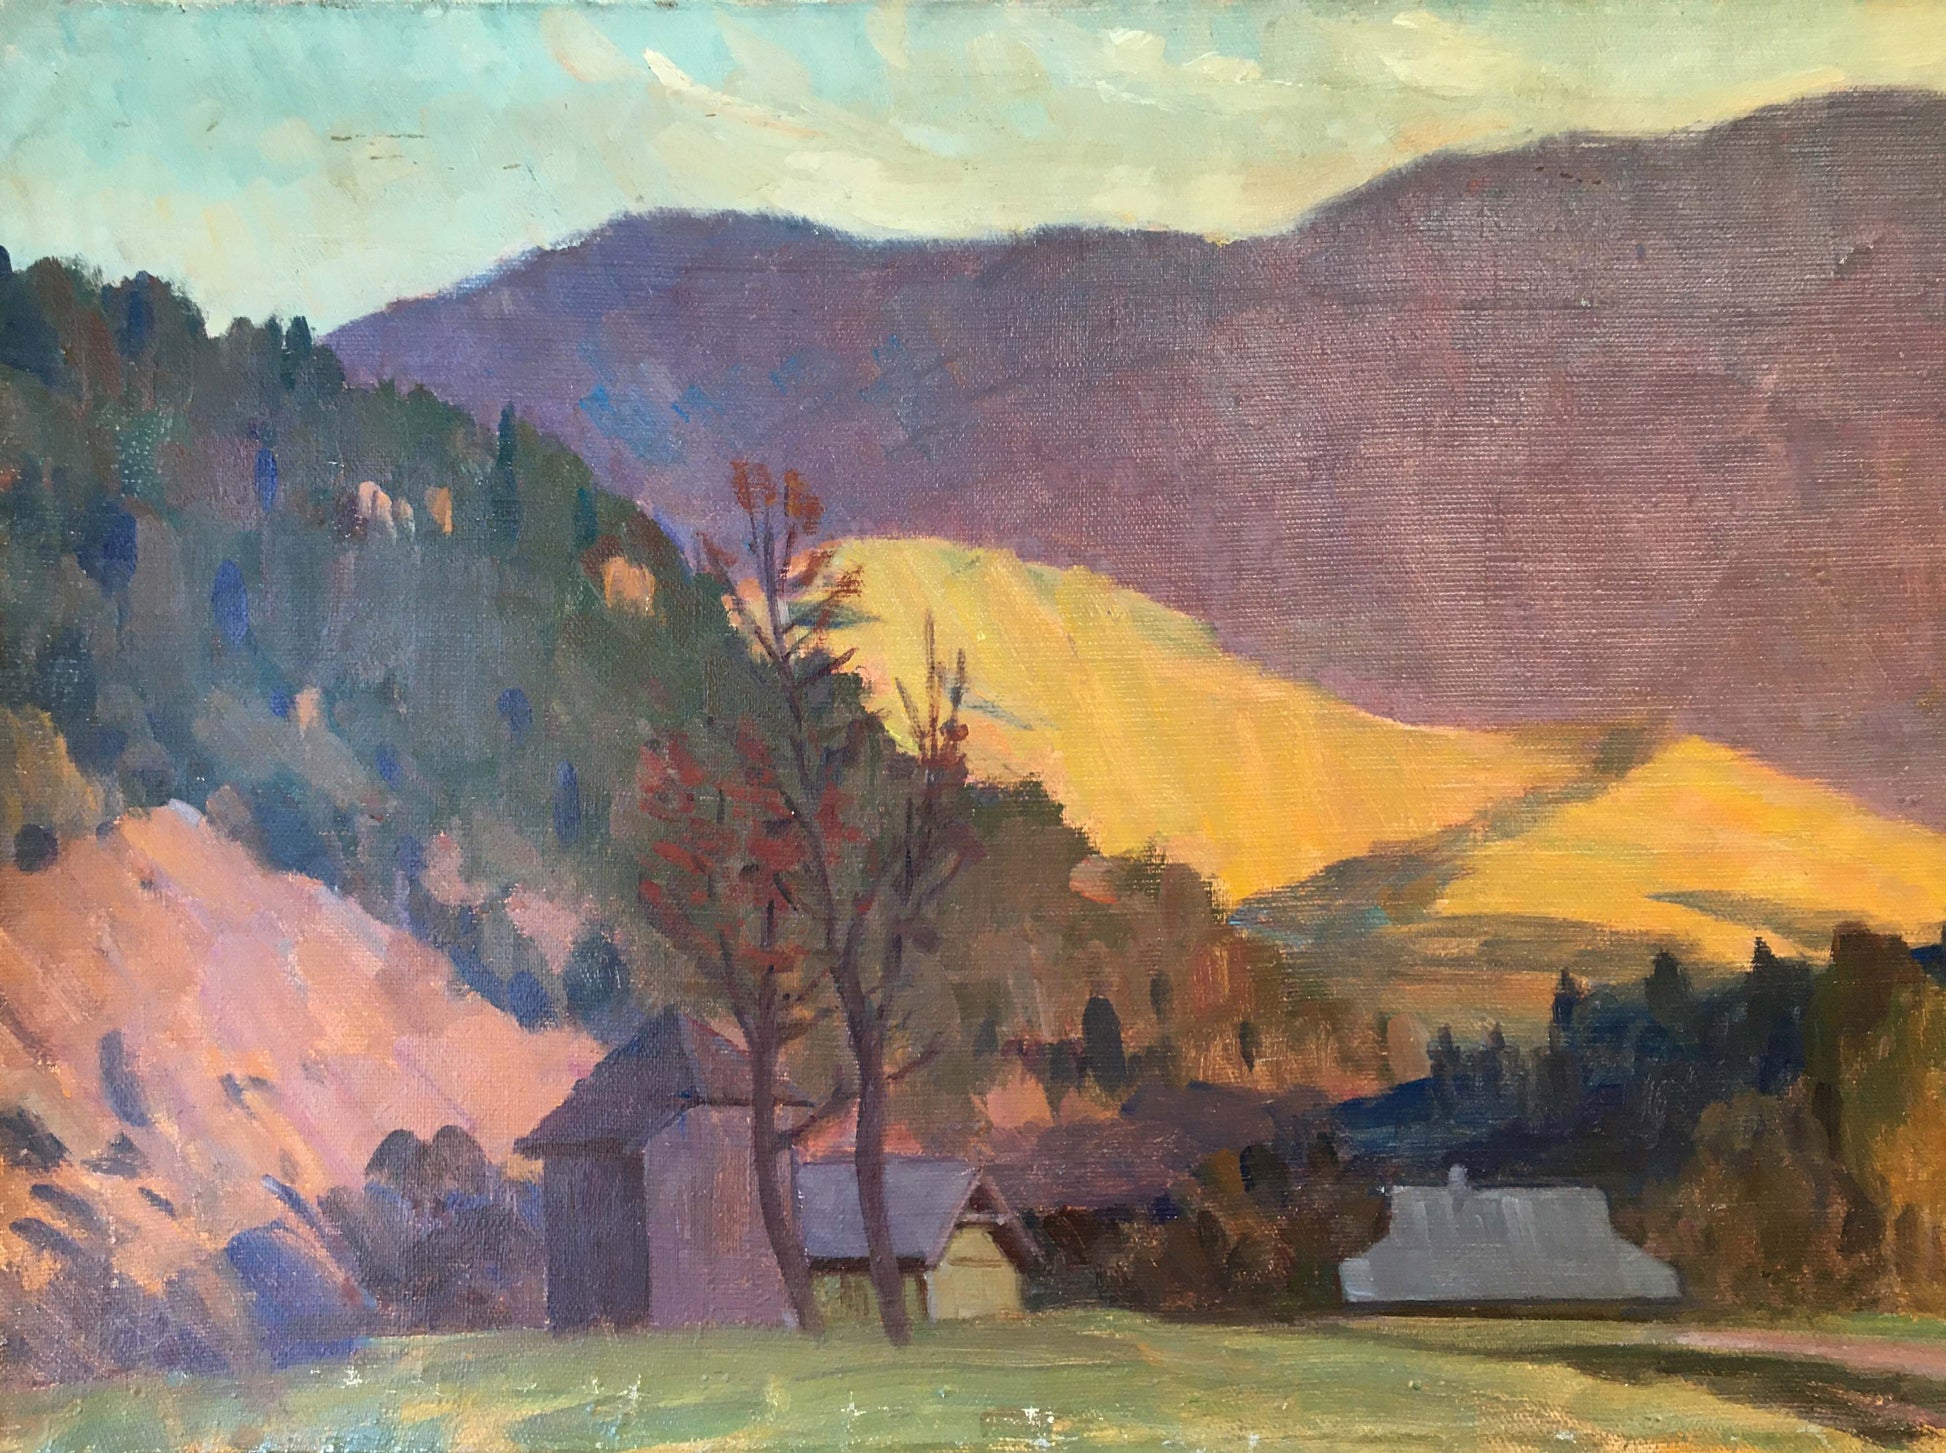 The artwork by Chernikov Vladimir Mikhailovich portrays mountains in oils